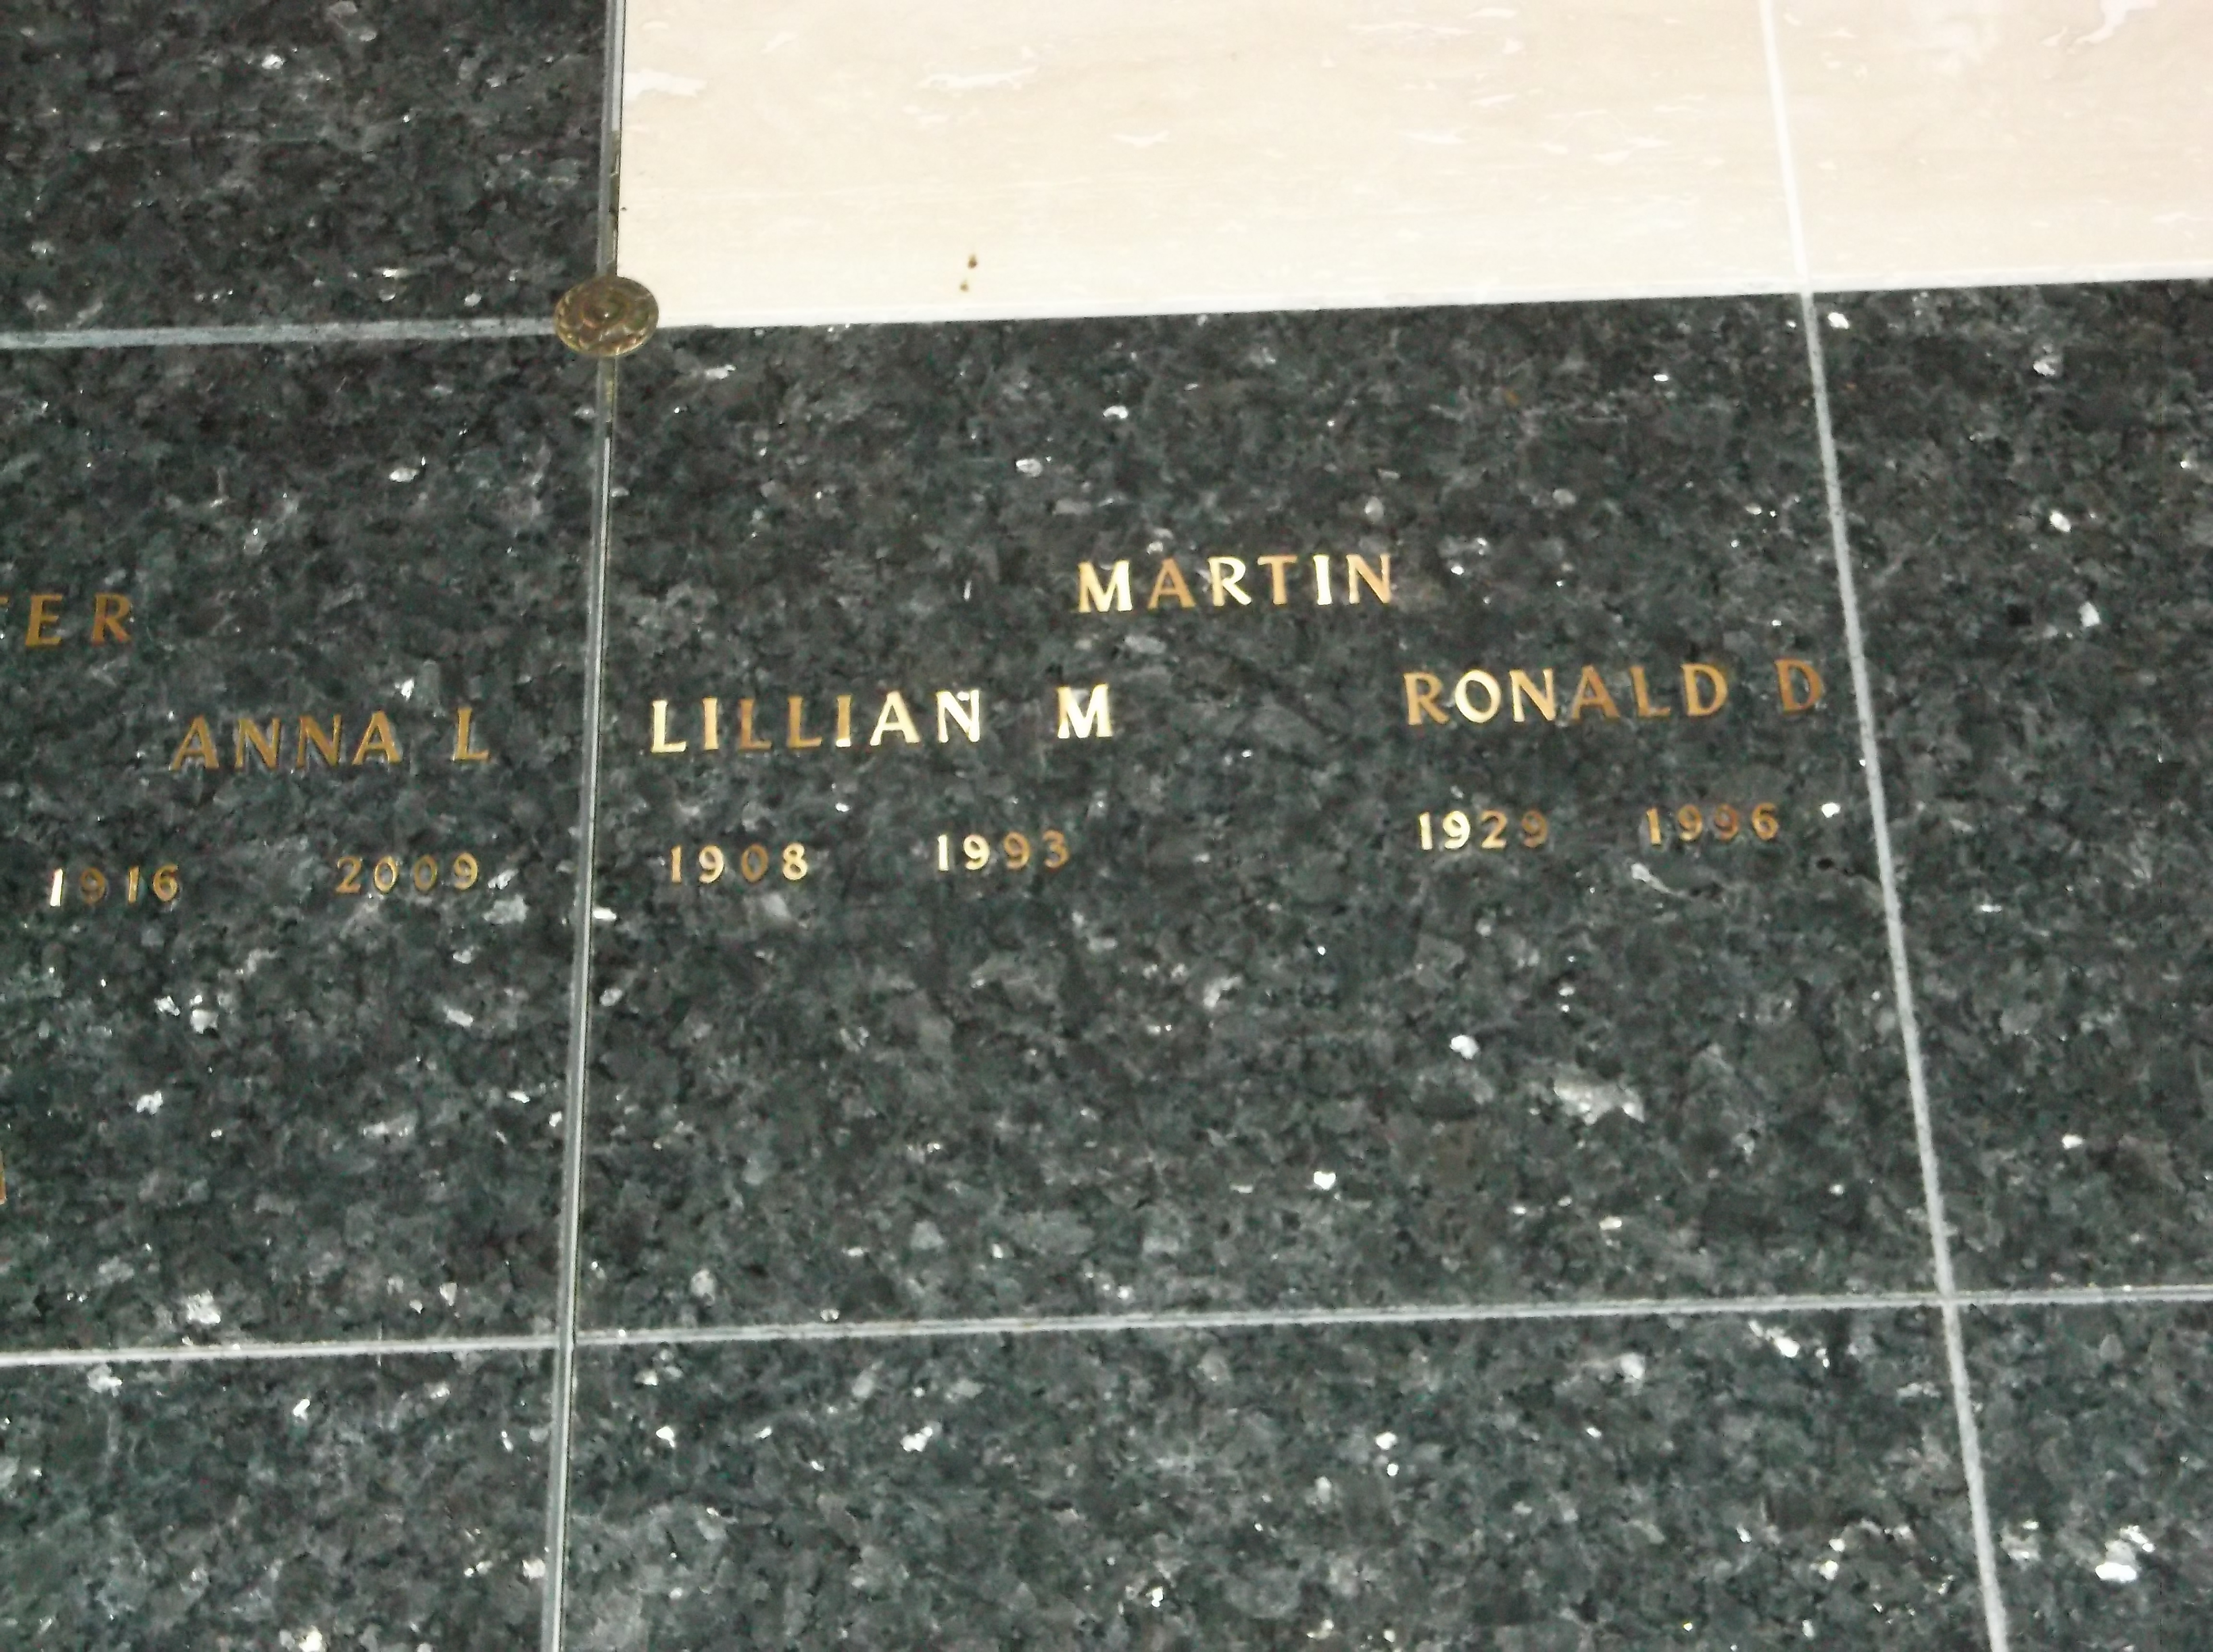 Lillian M Martin